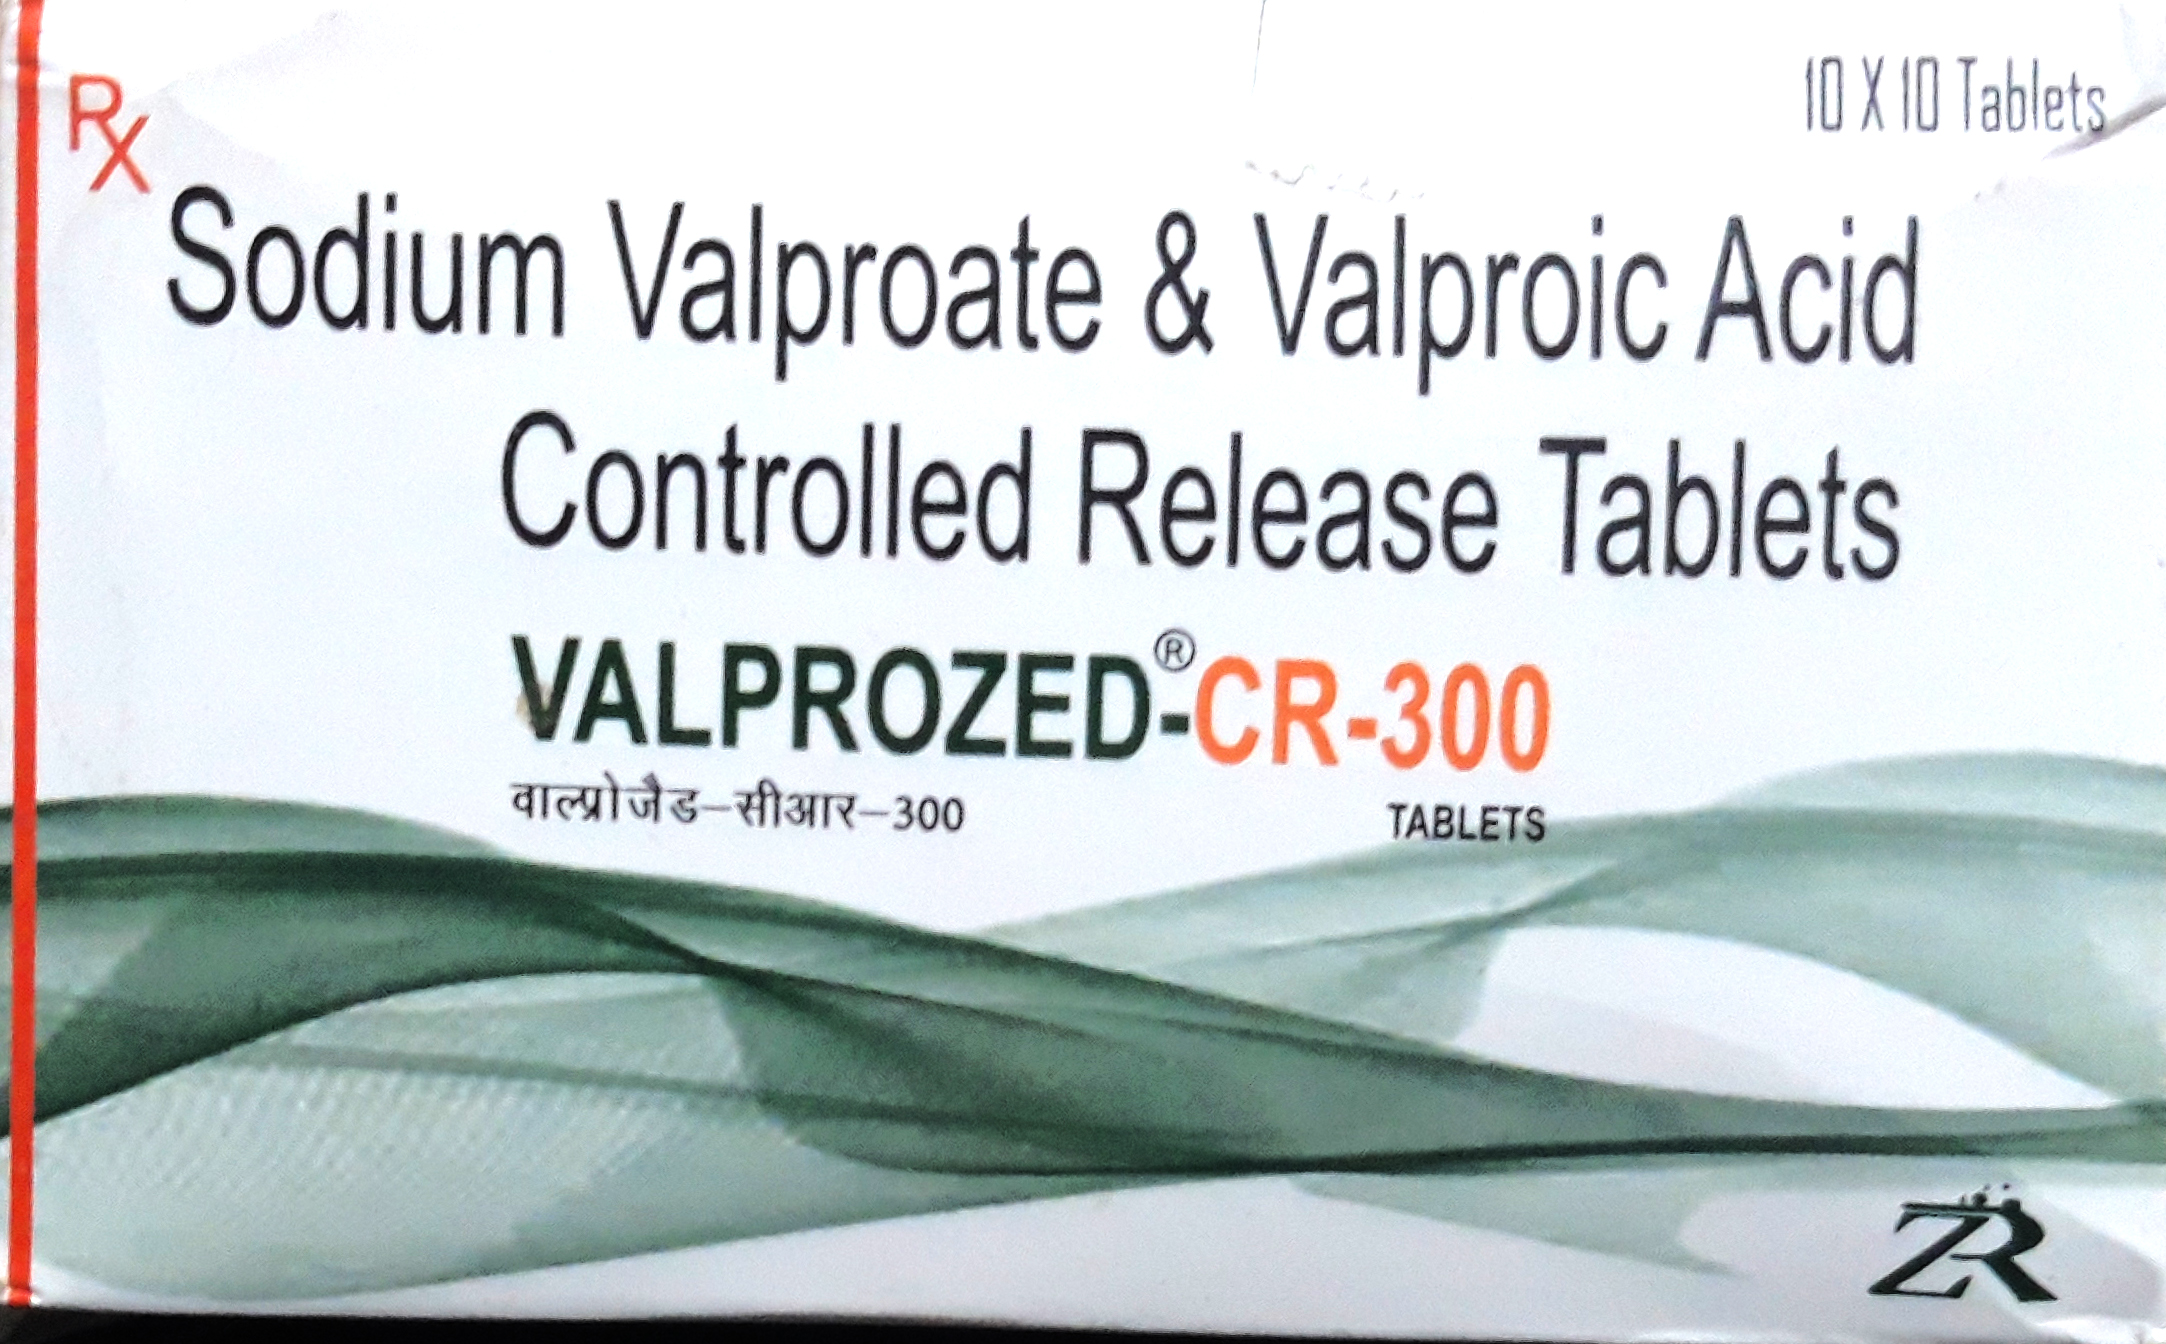 Valprozed-CR-300